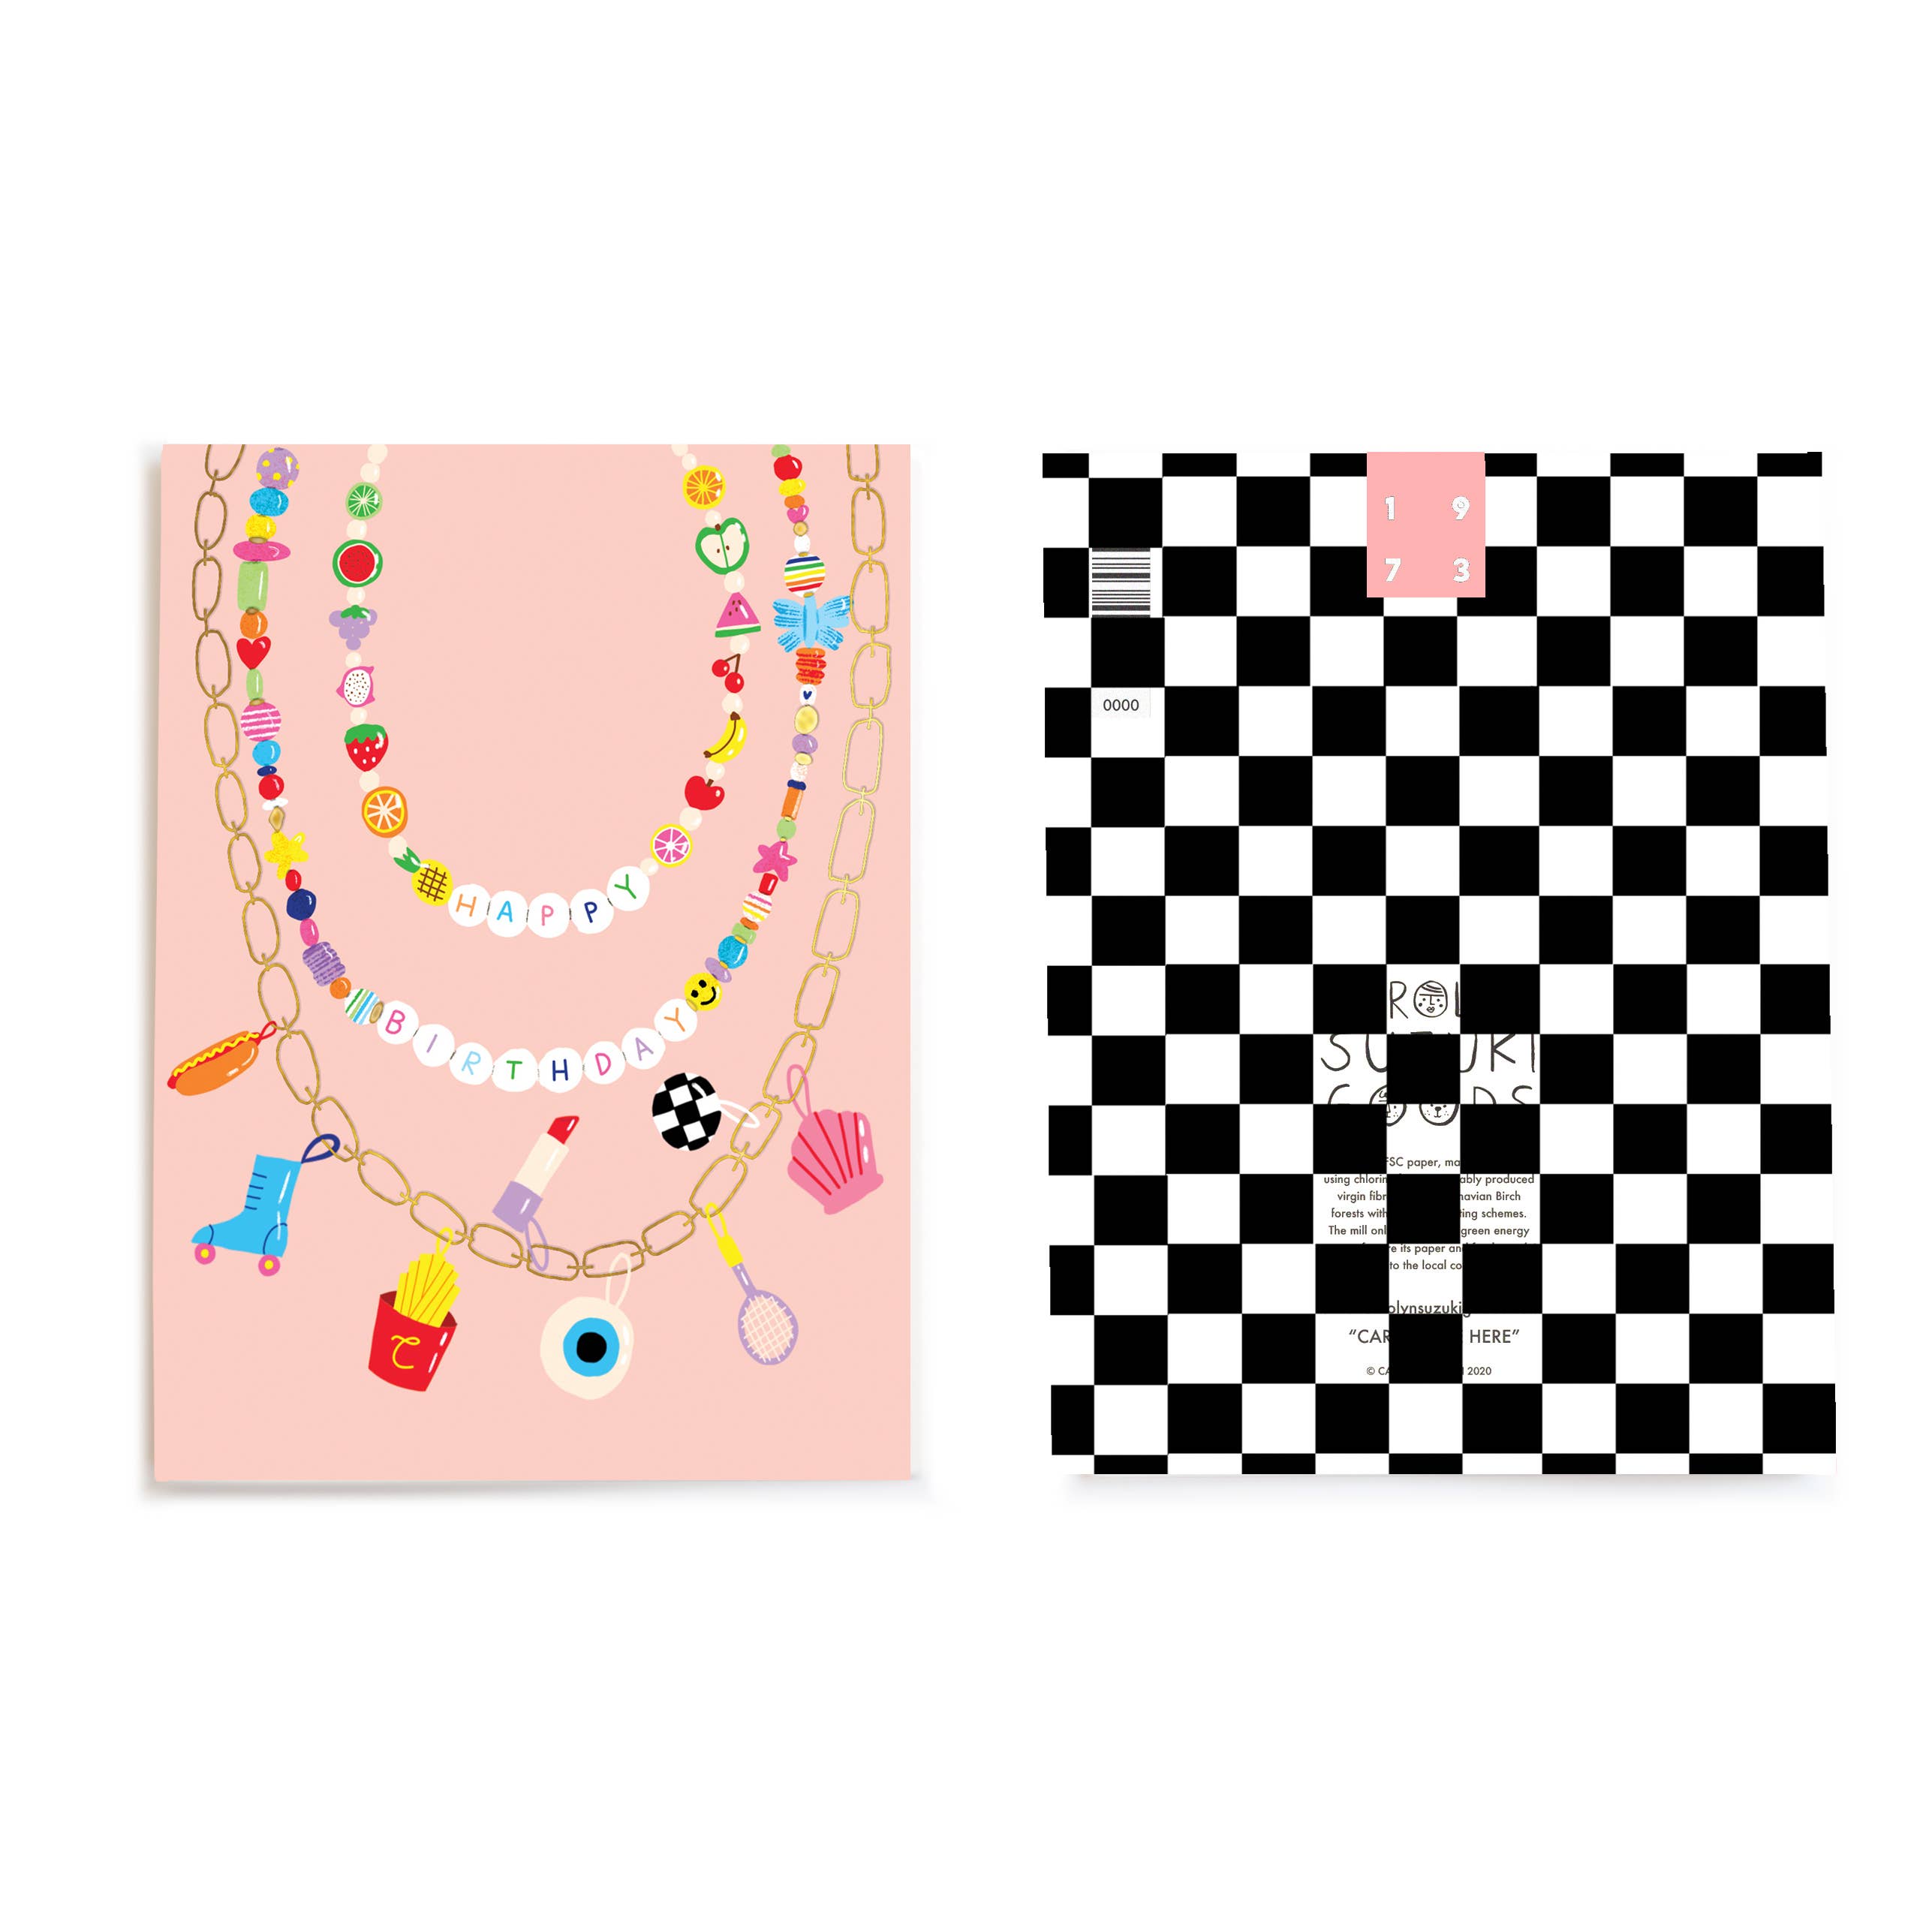 Birthday Beads - Birthday Card - Proper